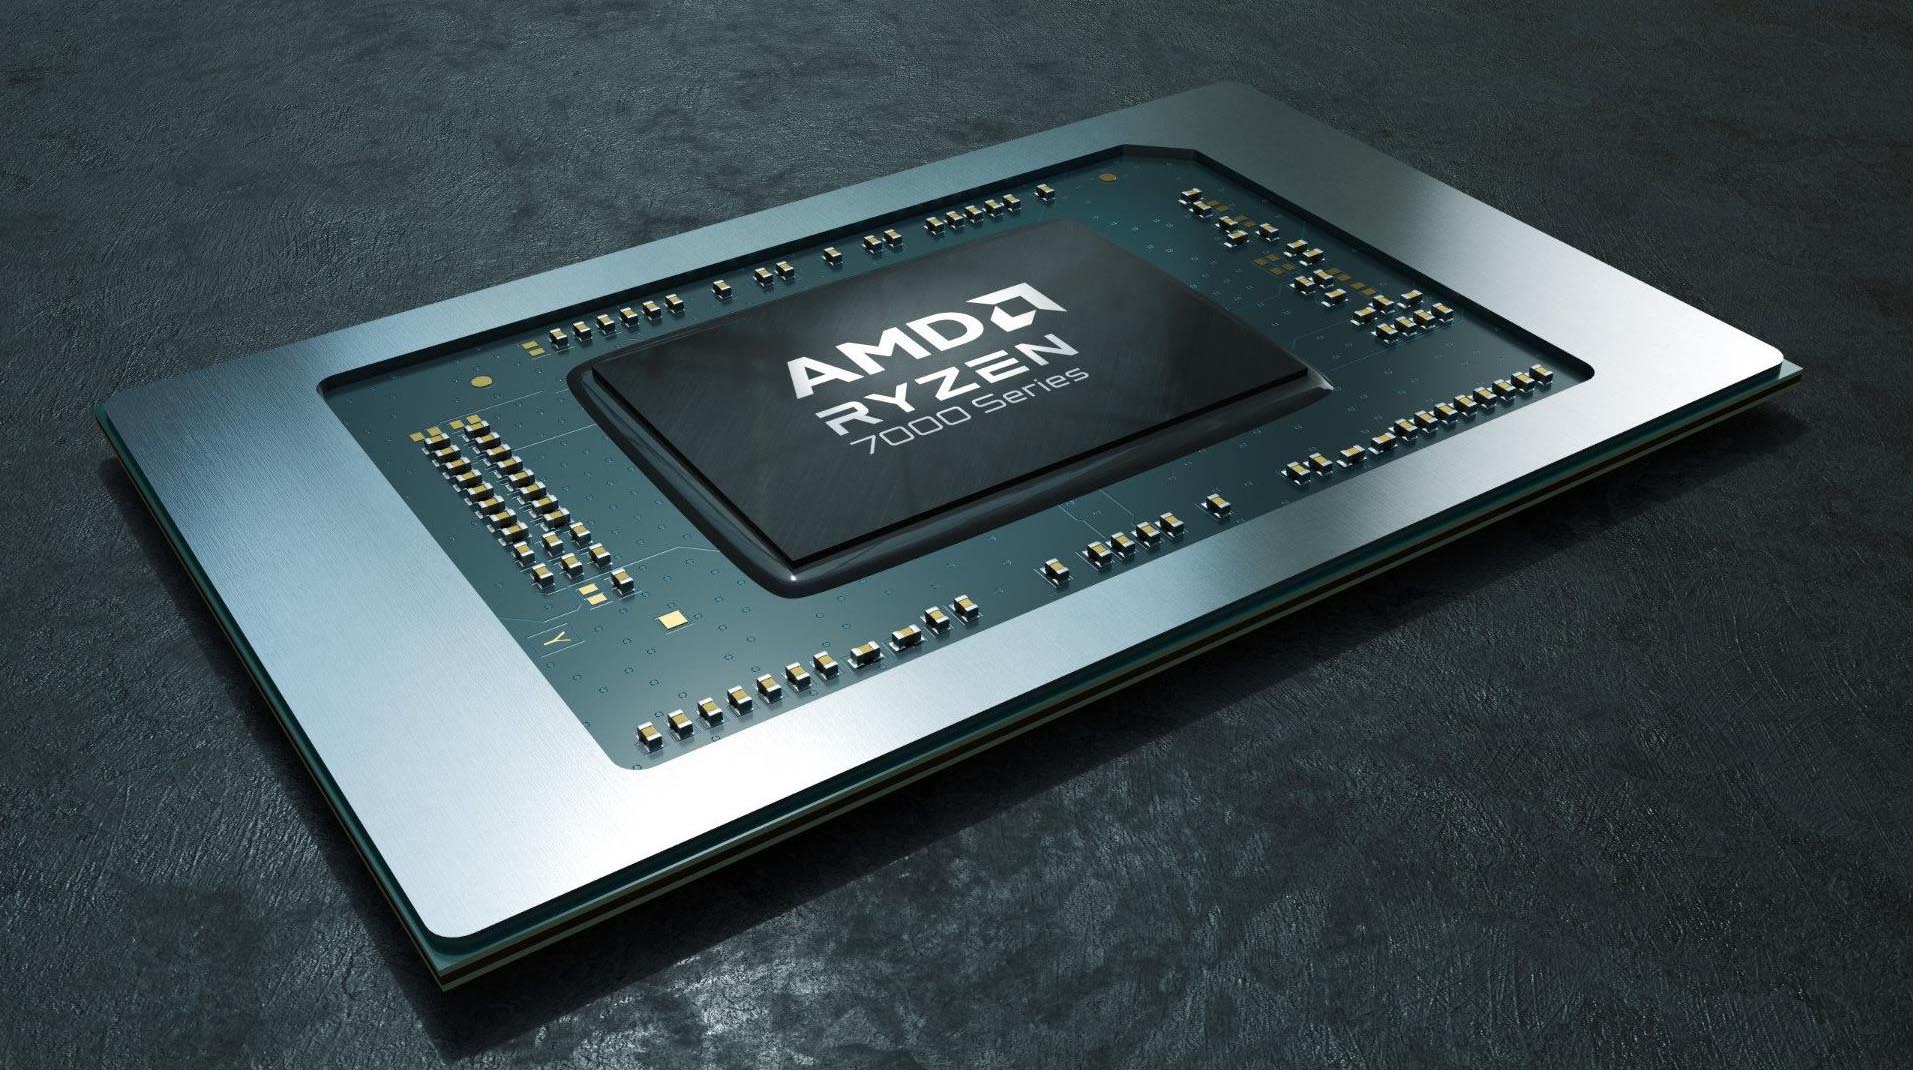 AMD-Radeon-780M-Integrated-GPU.jpg